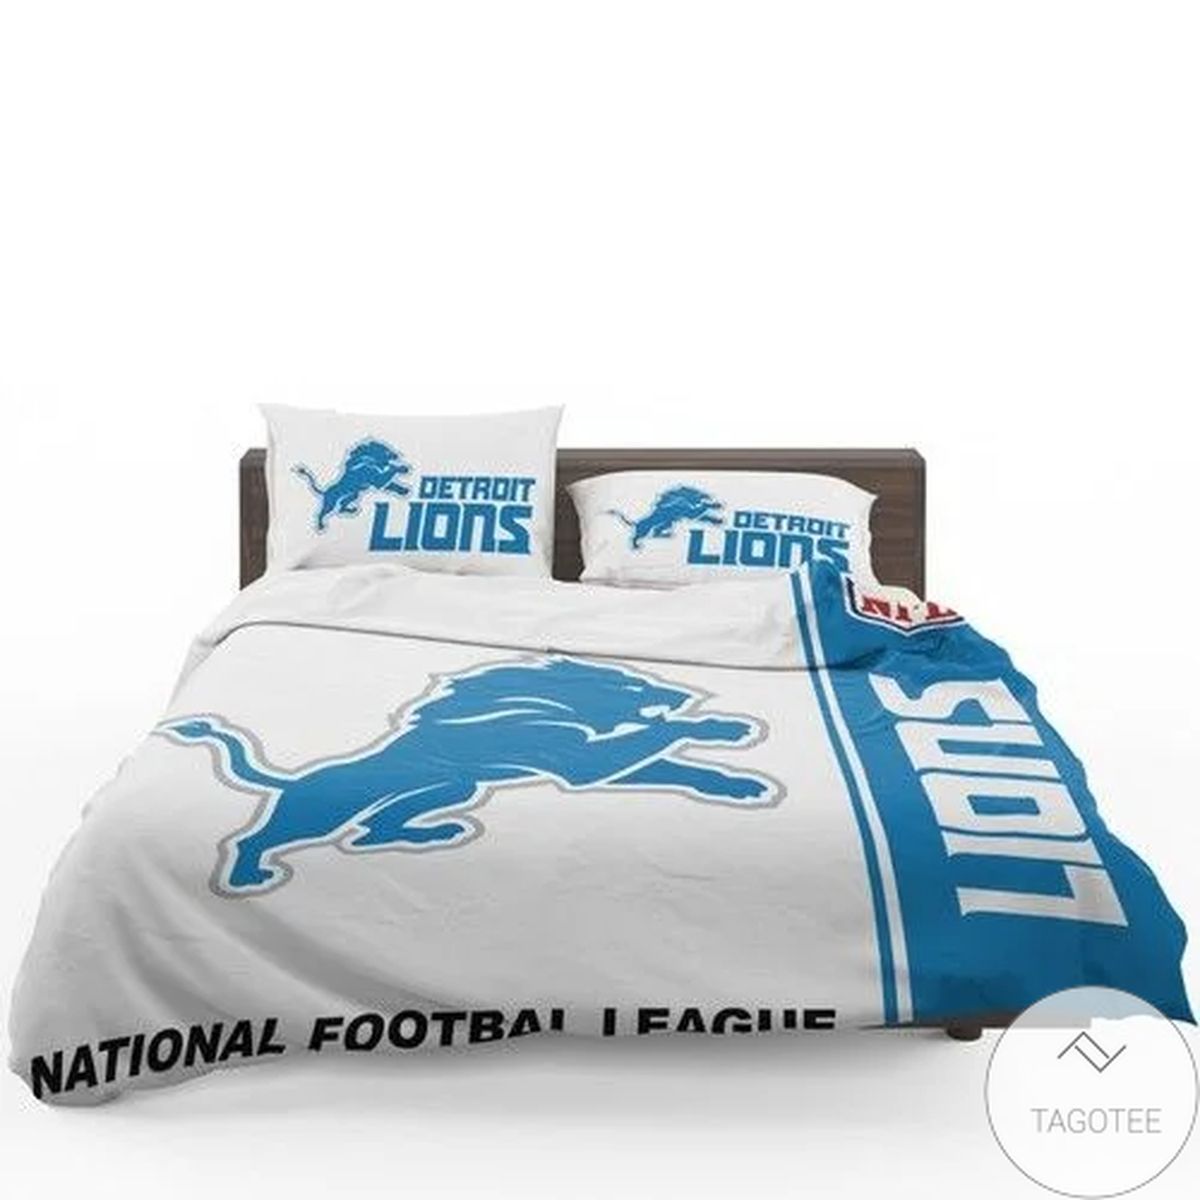 Detroit Lions  National Football League Bedding Set